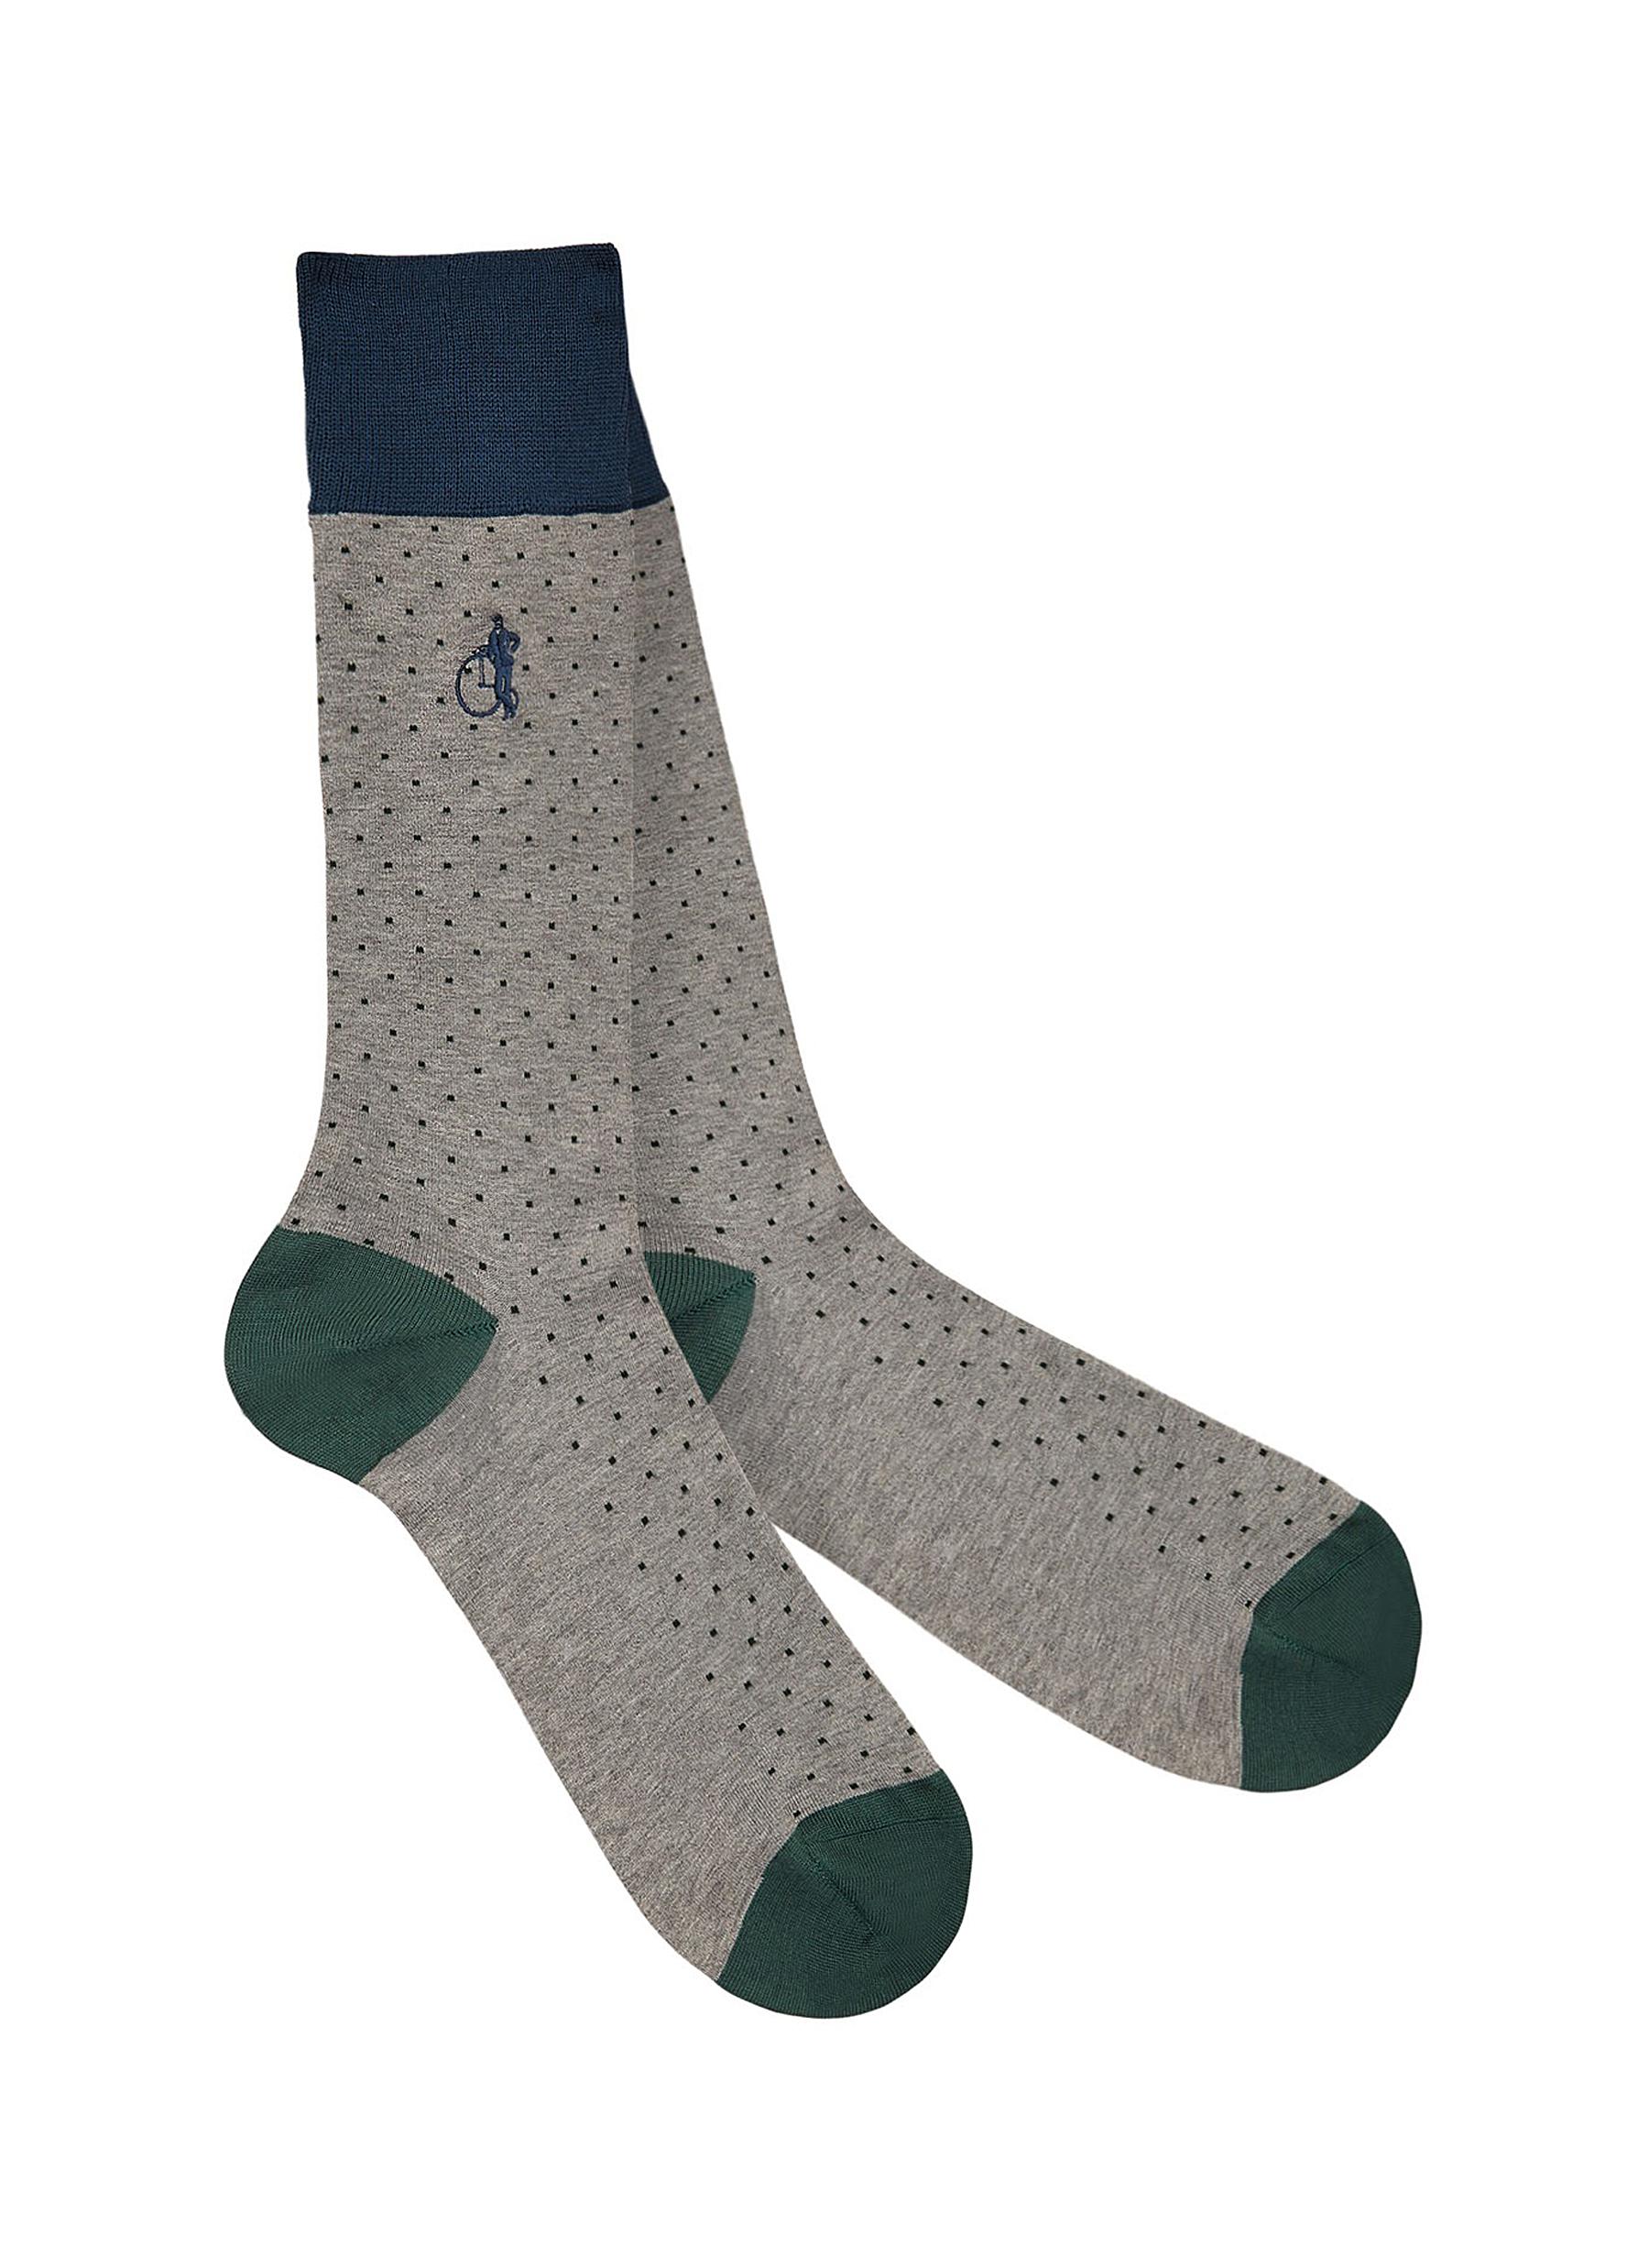 Spot of Style Mid-Calf Socks